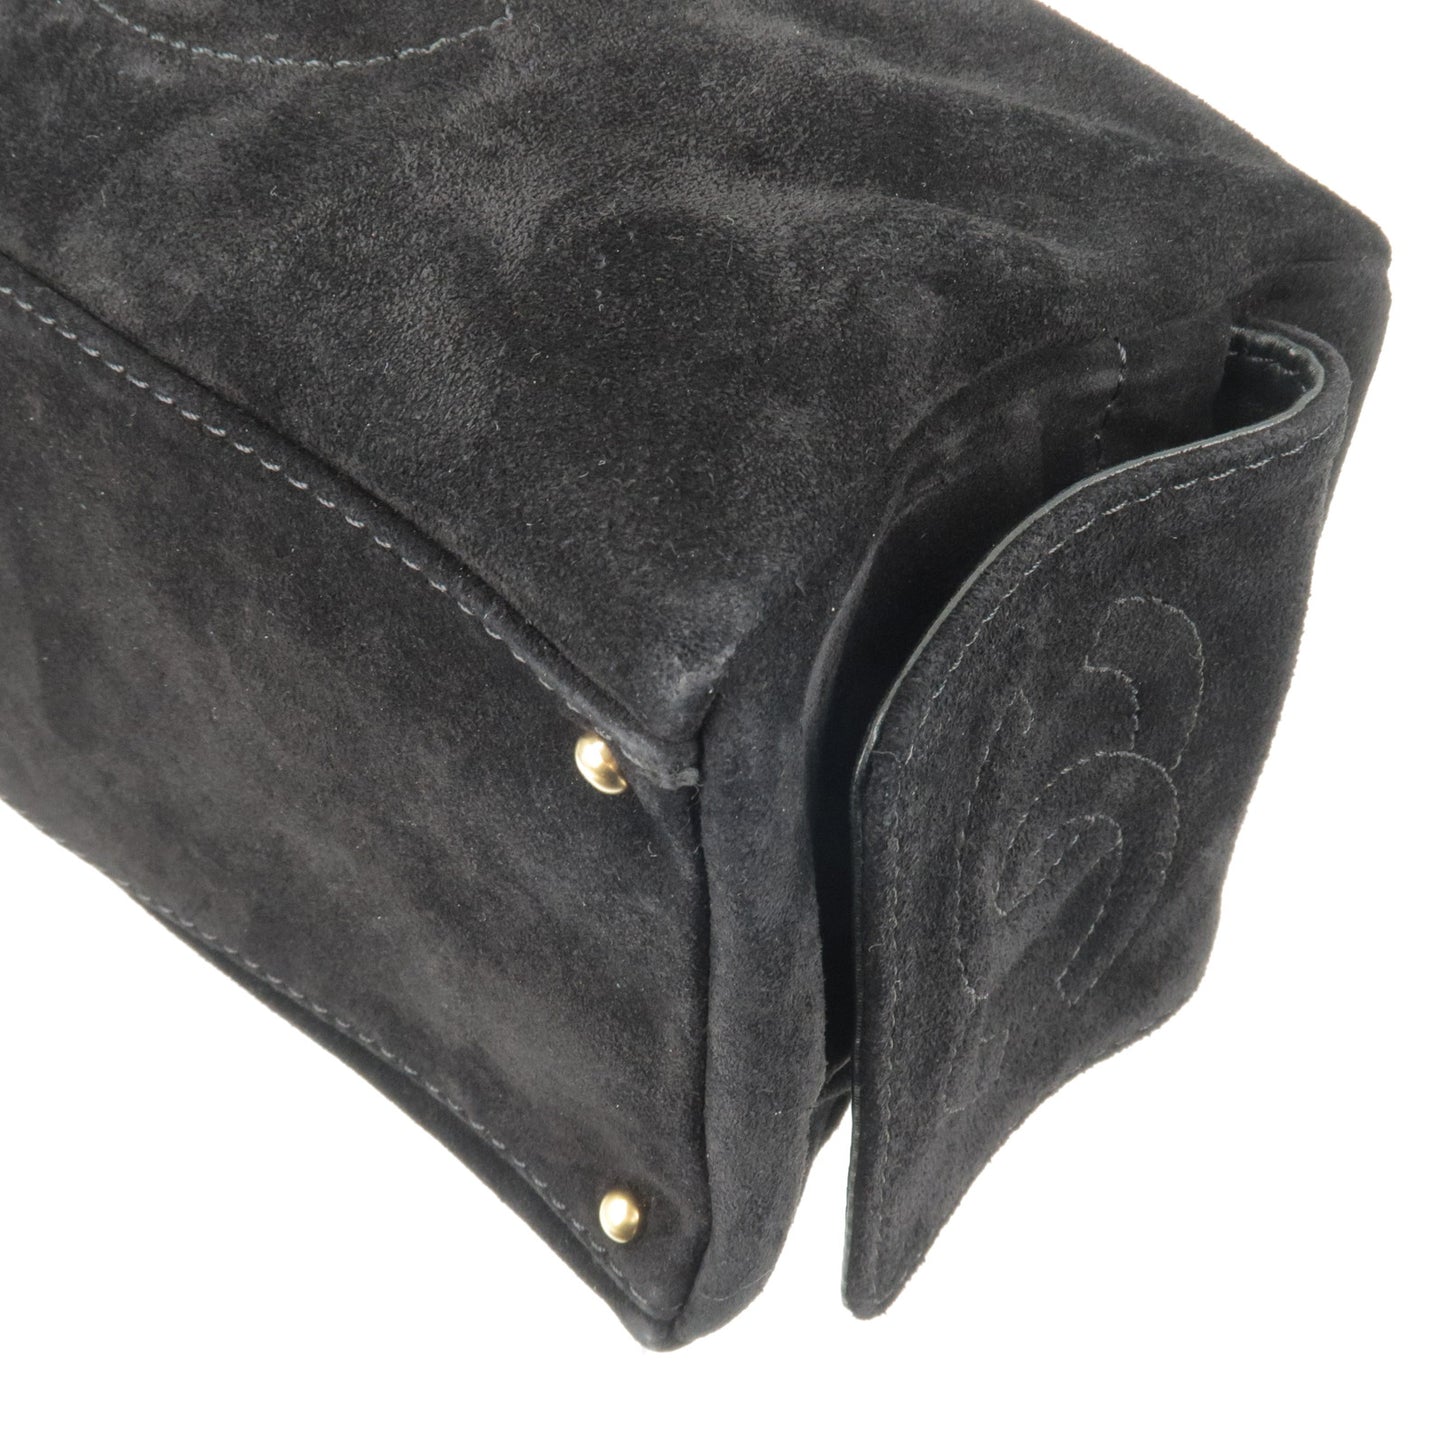 CHANEL Suede Leather Chain Shoulder Bag Boston Bag Black